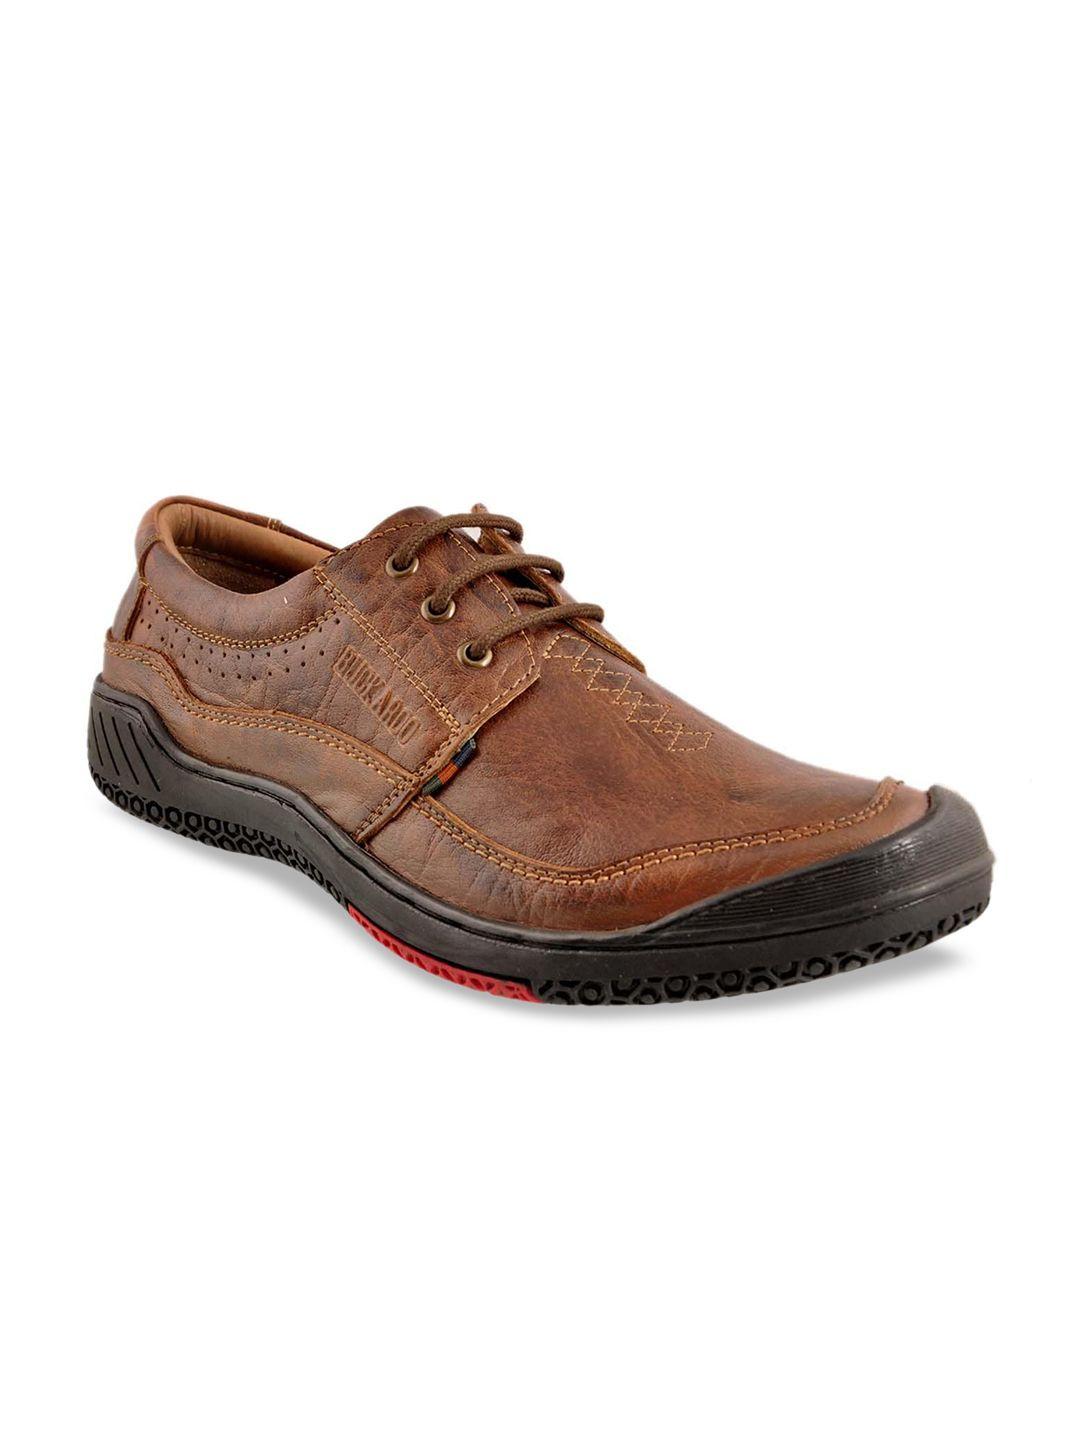 buckaroo men tan brown solid leather flat boots